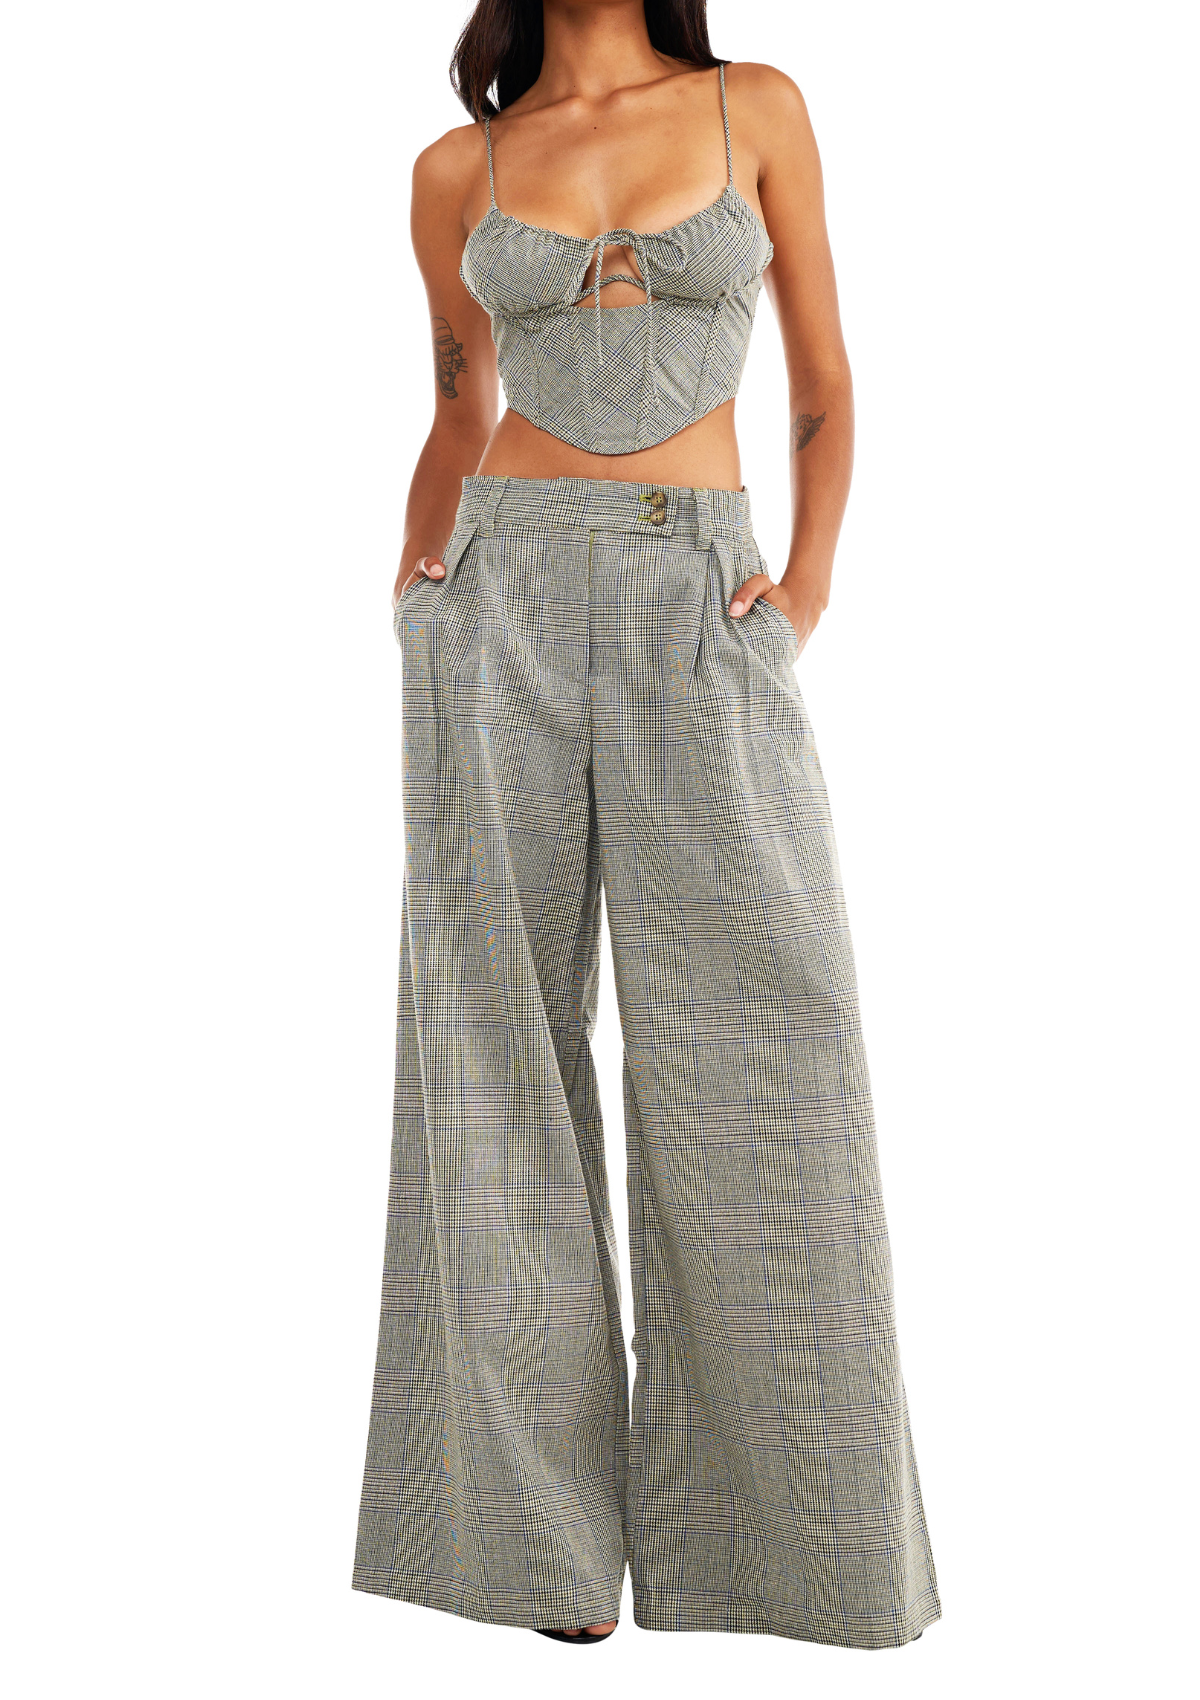 Samara Trouser Womens Check Tartan Plaid Print Full Length Low Rise Wide Leg Pants Tan and Grey